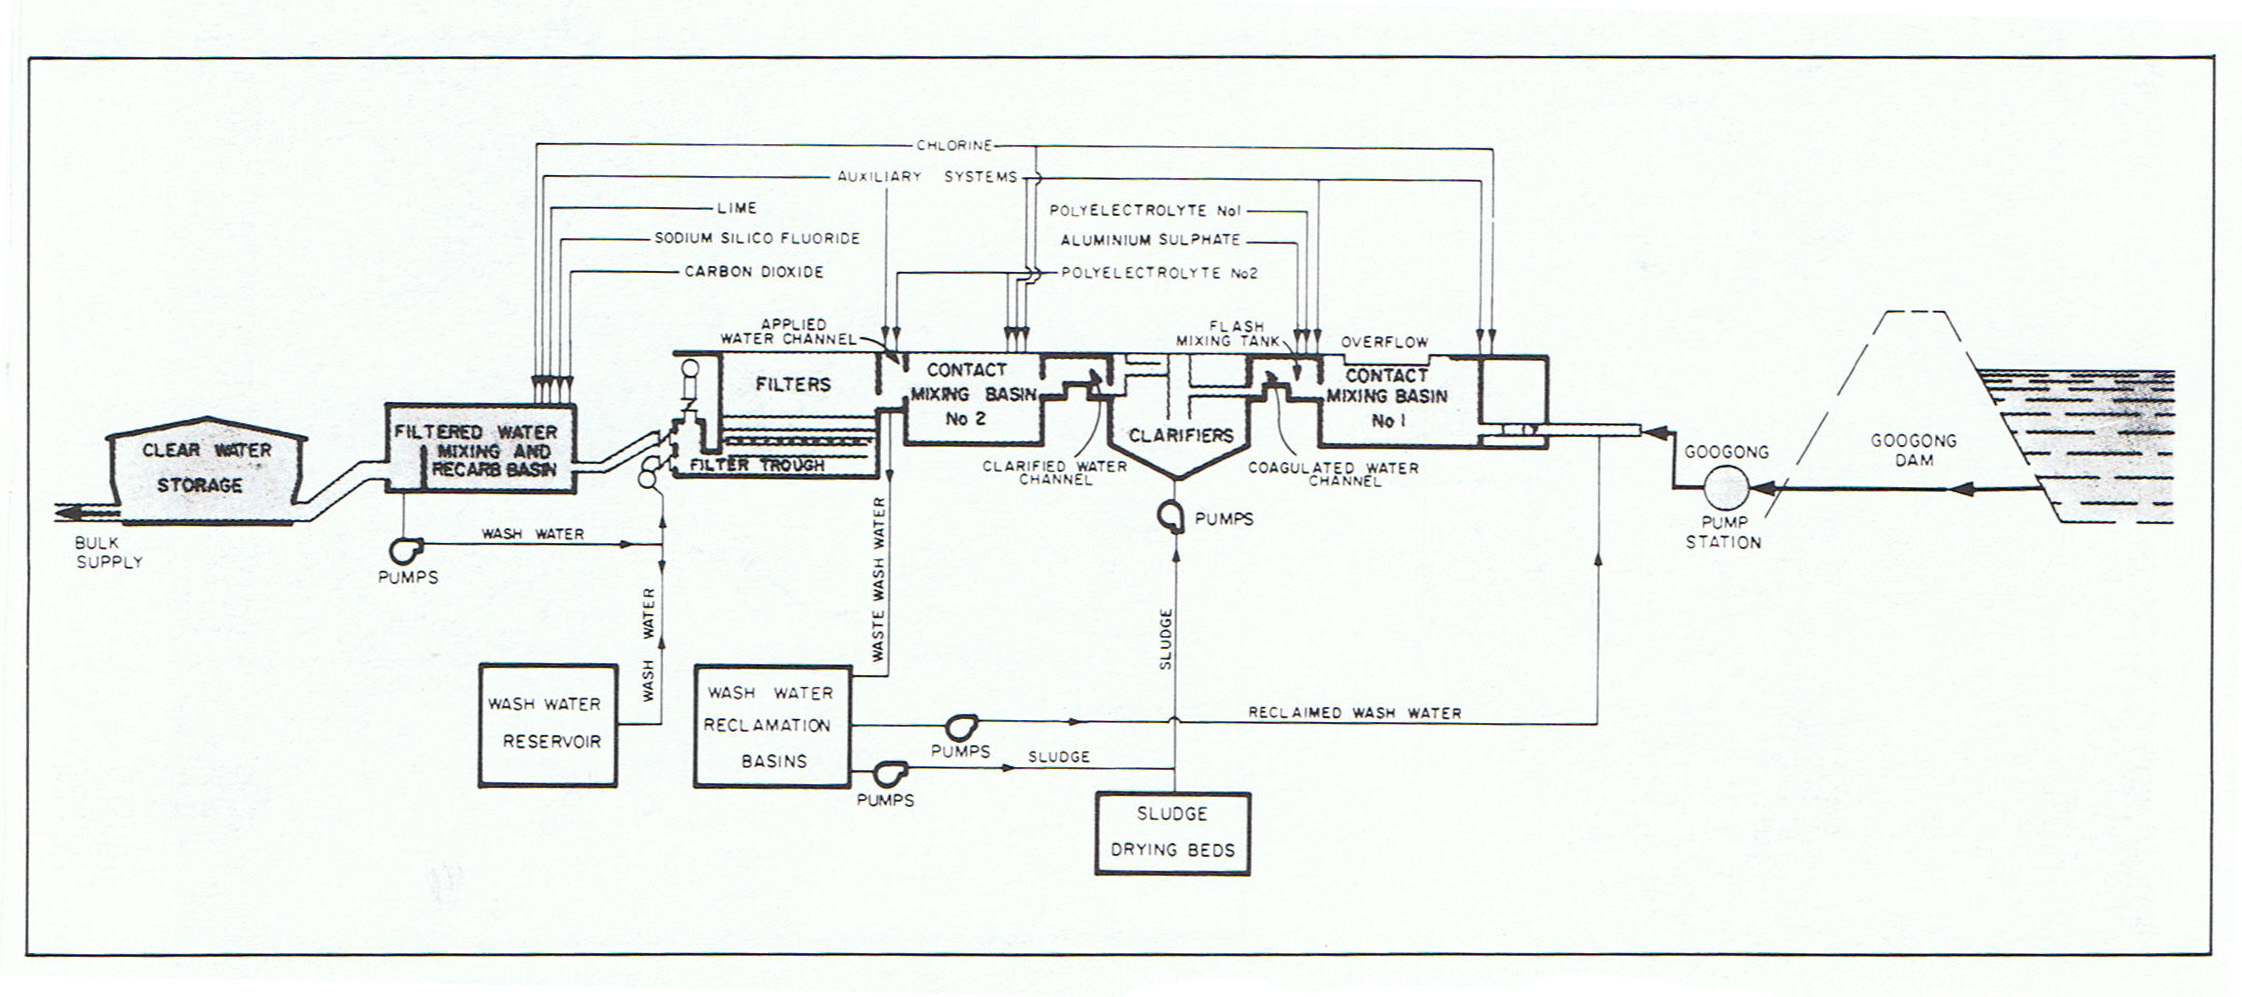  Diagram of processes at Googong Water Treatment Plant.